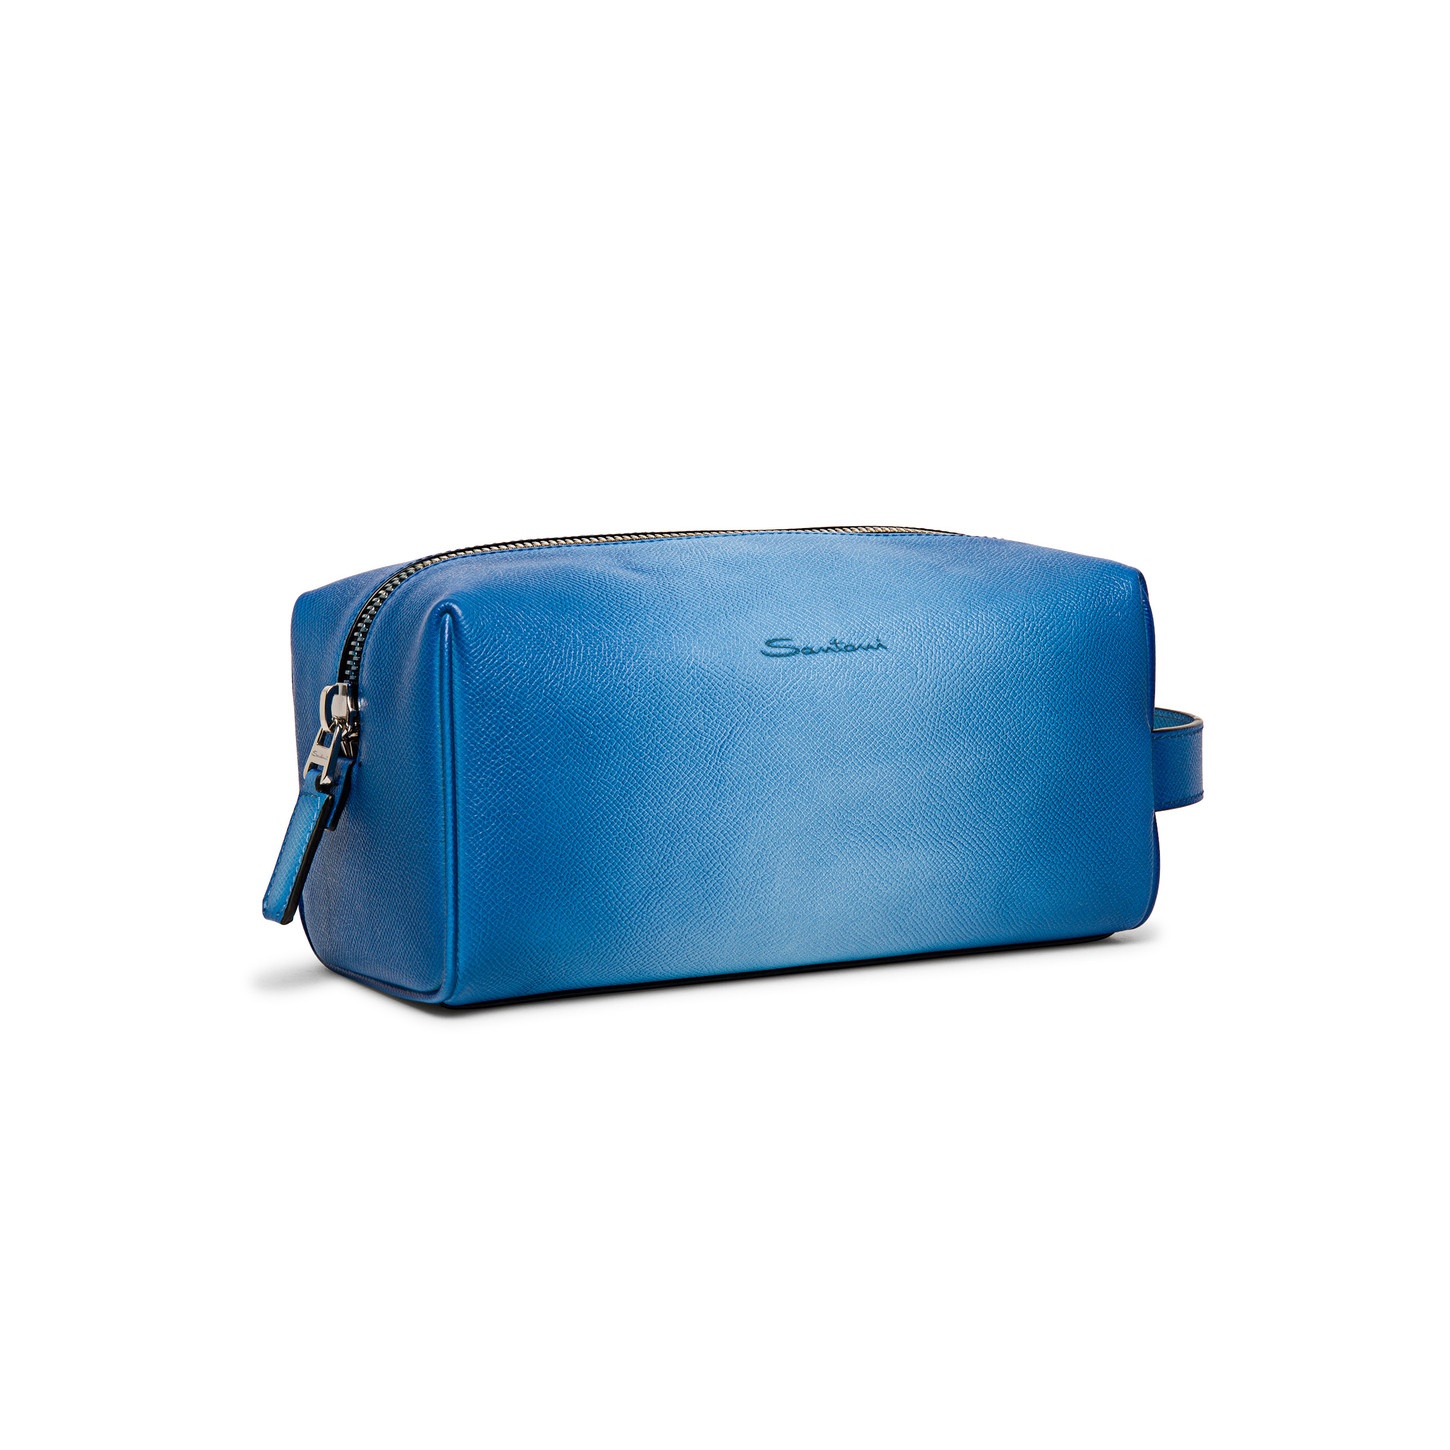 Light blue saffiano leather pouch - 5